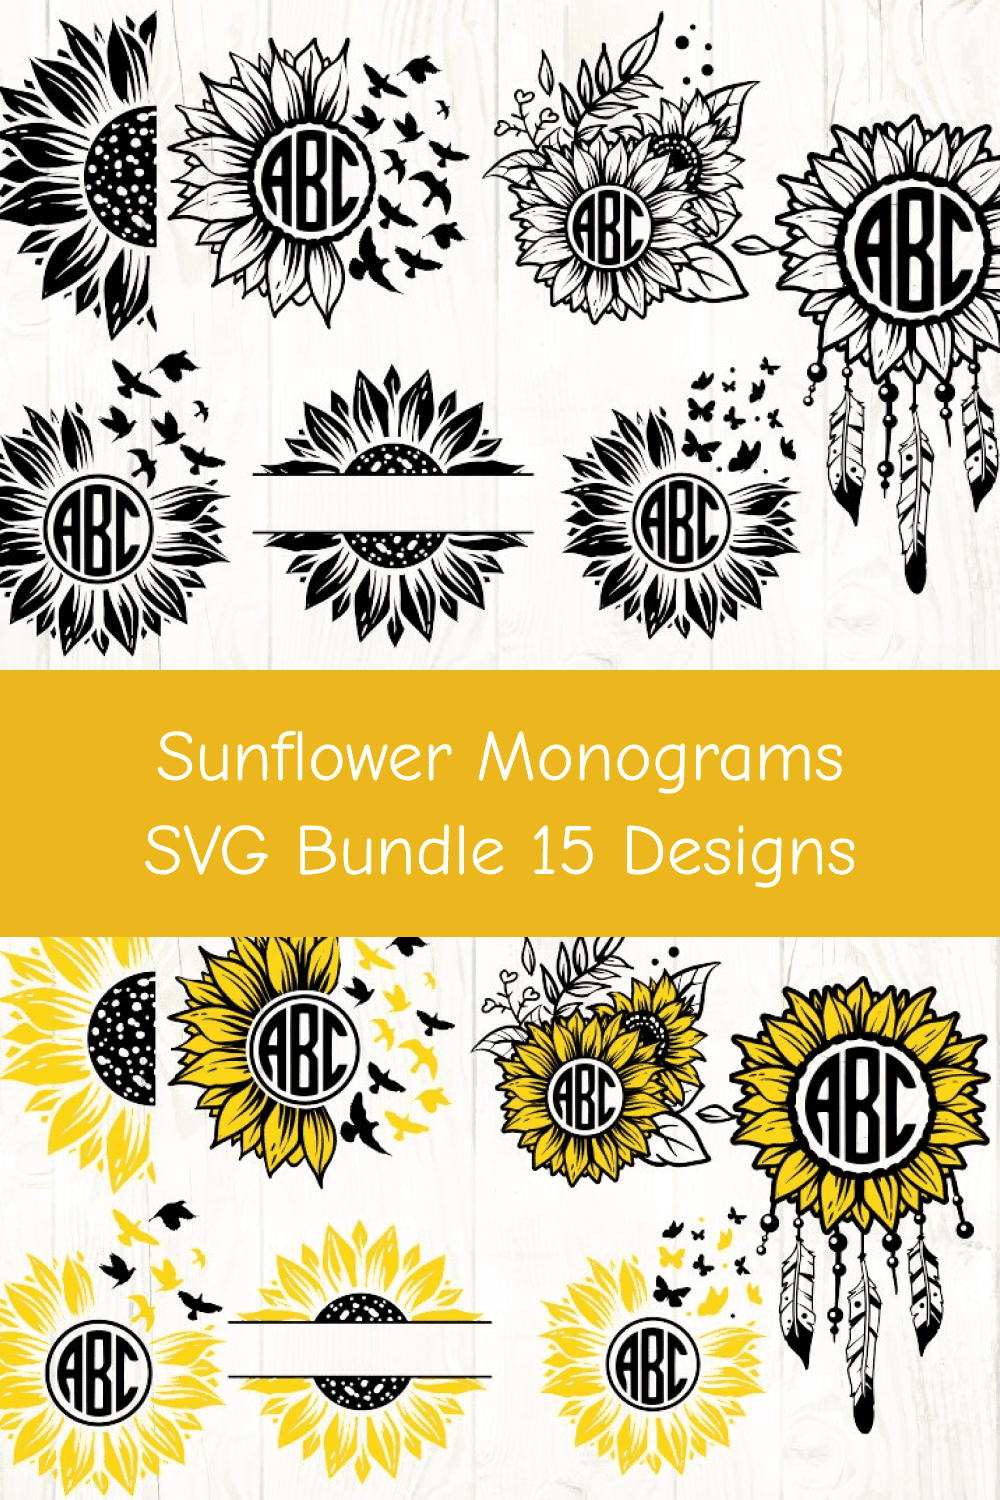 Sunflower Monograms SVG Bundle 15 Designs.